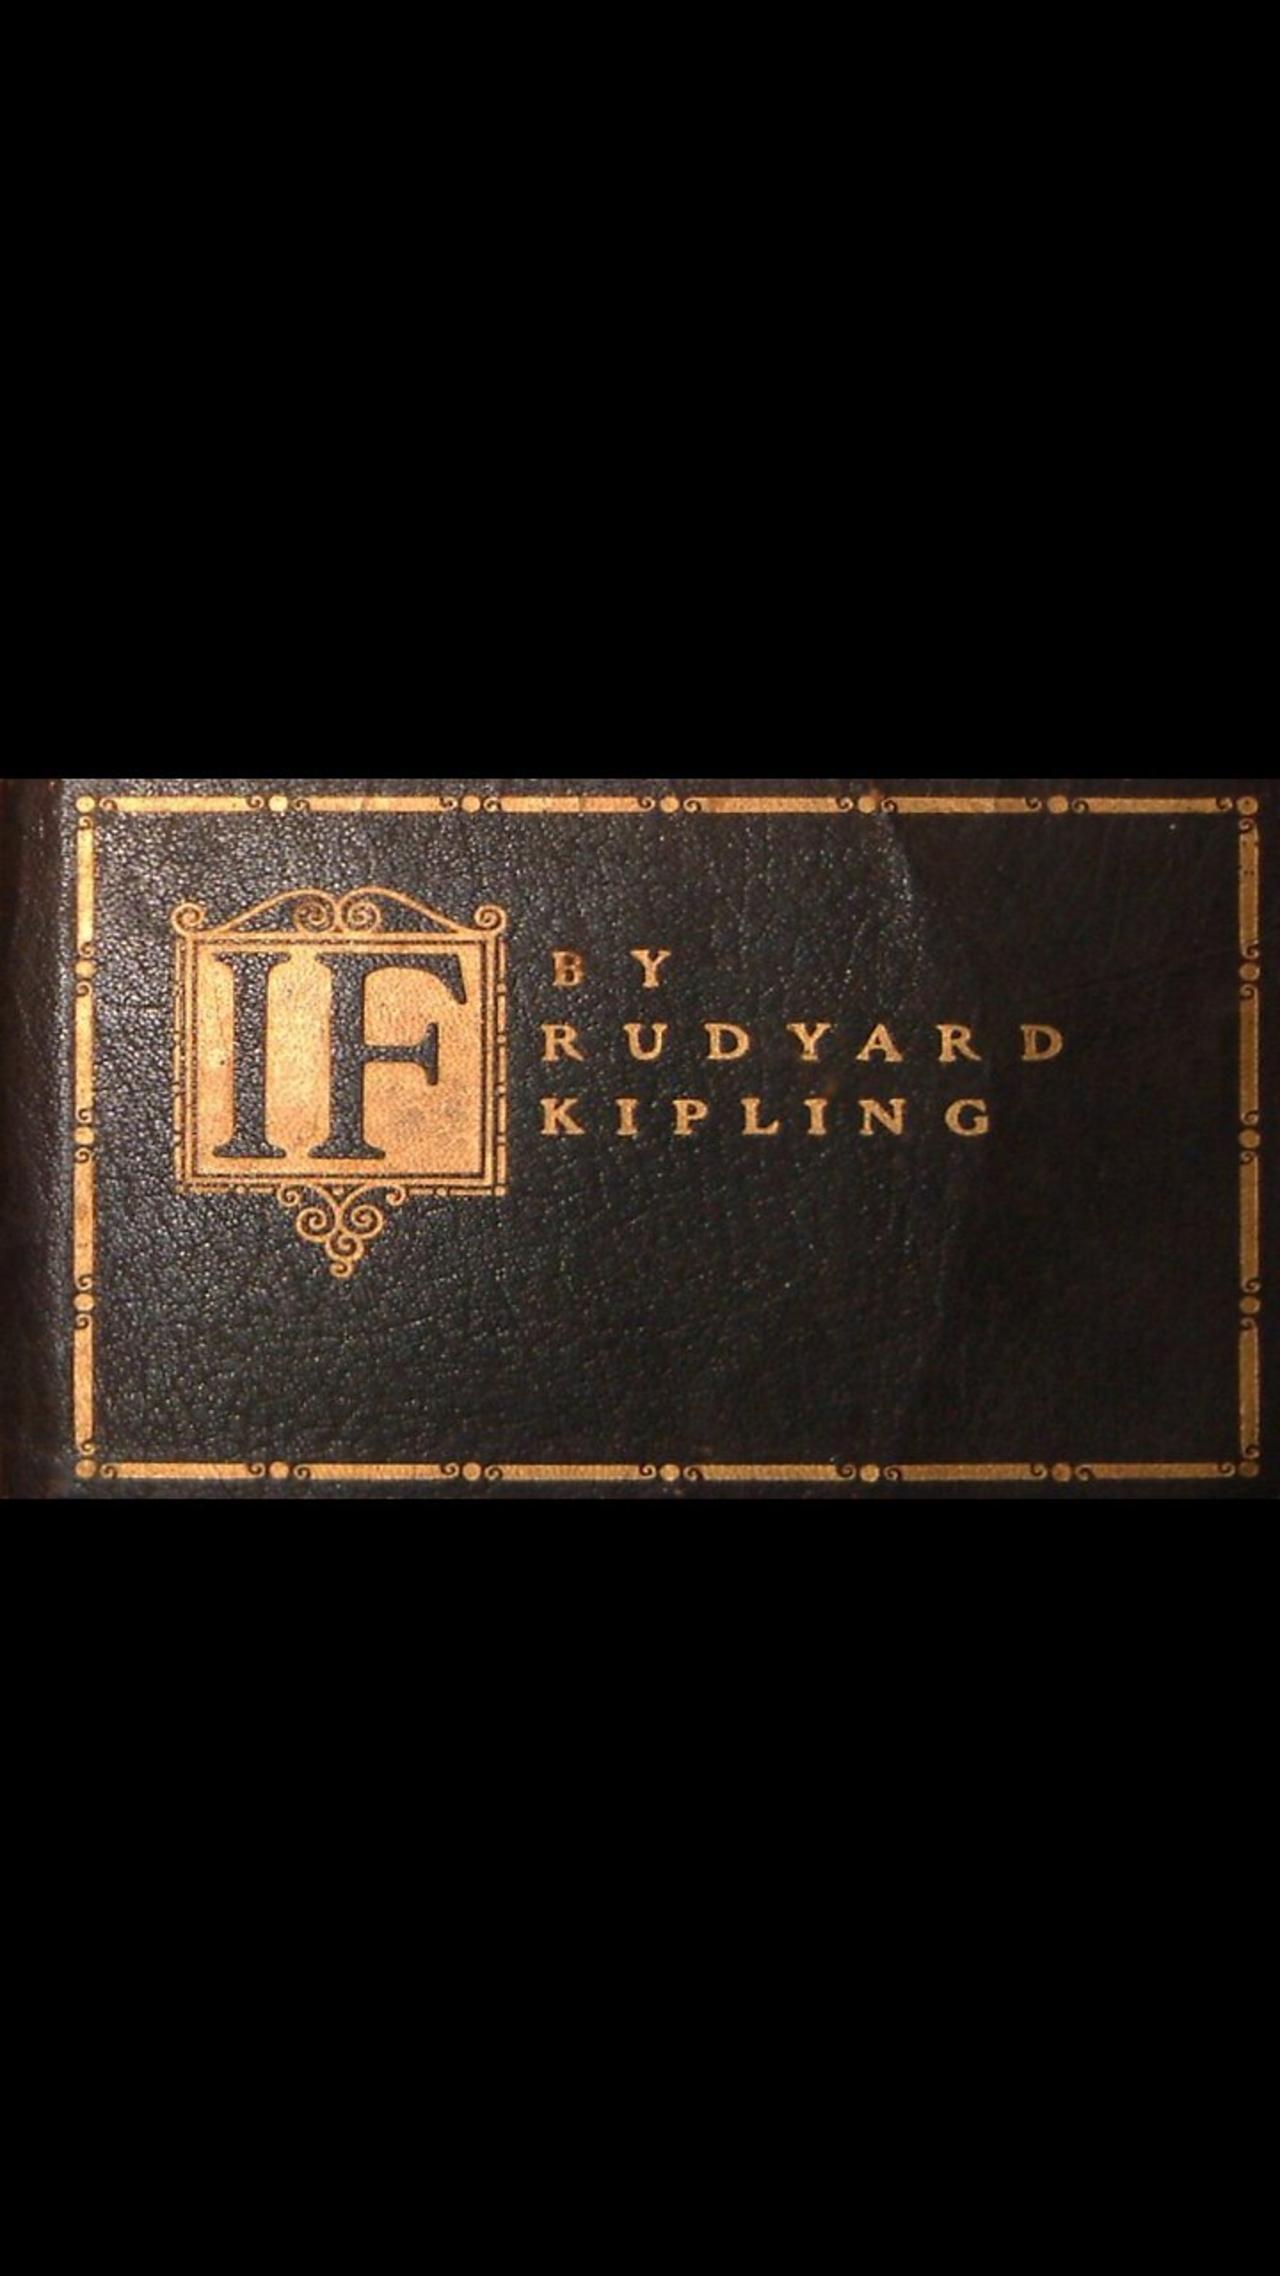 Poem "if" by by Rudyard Kipling President Donald J. Trump